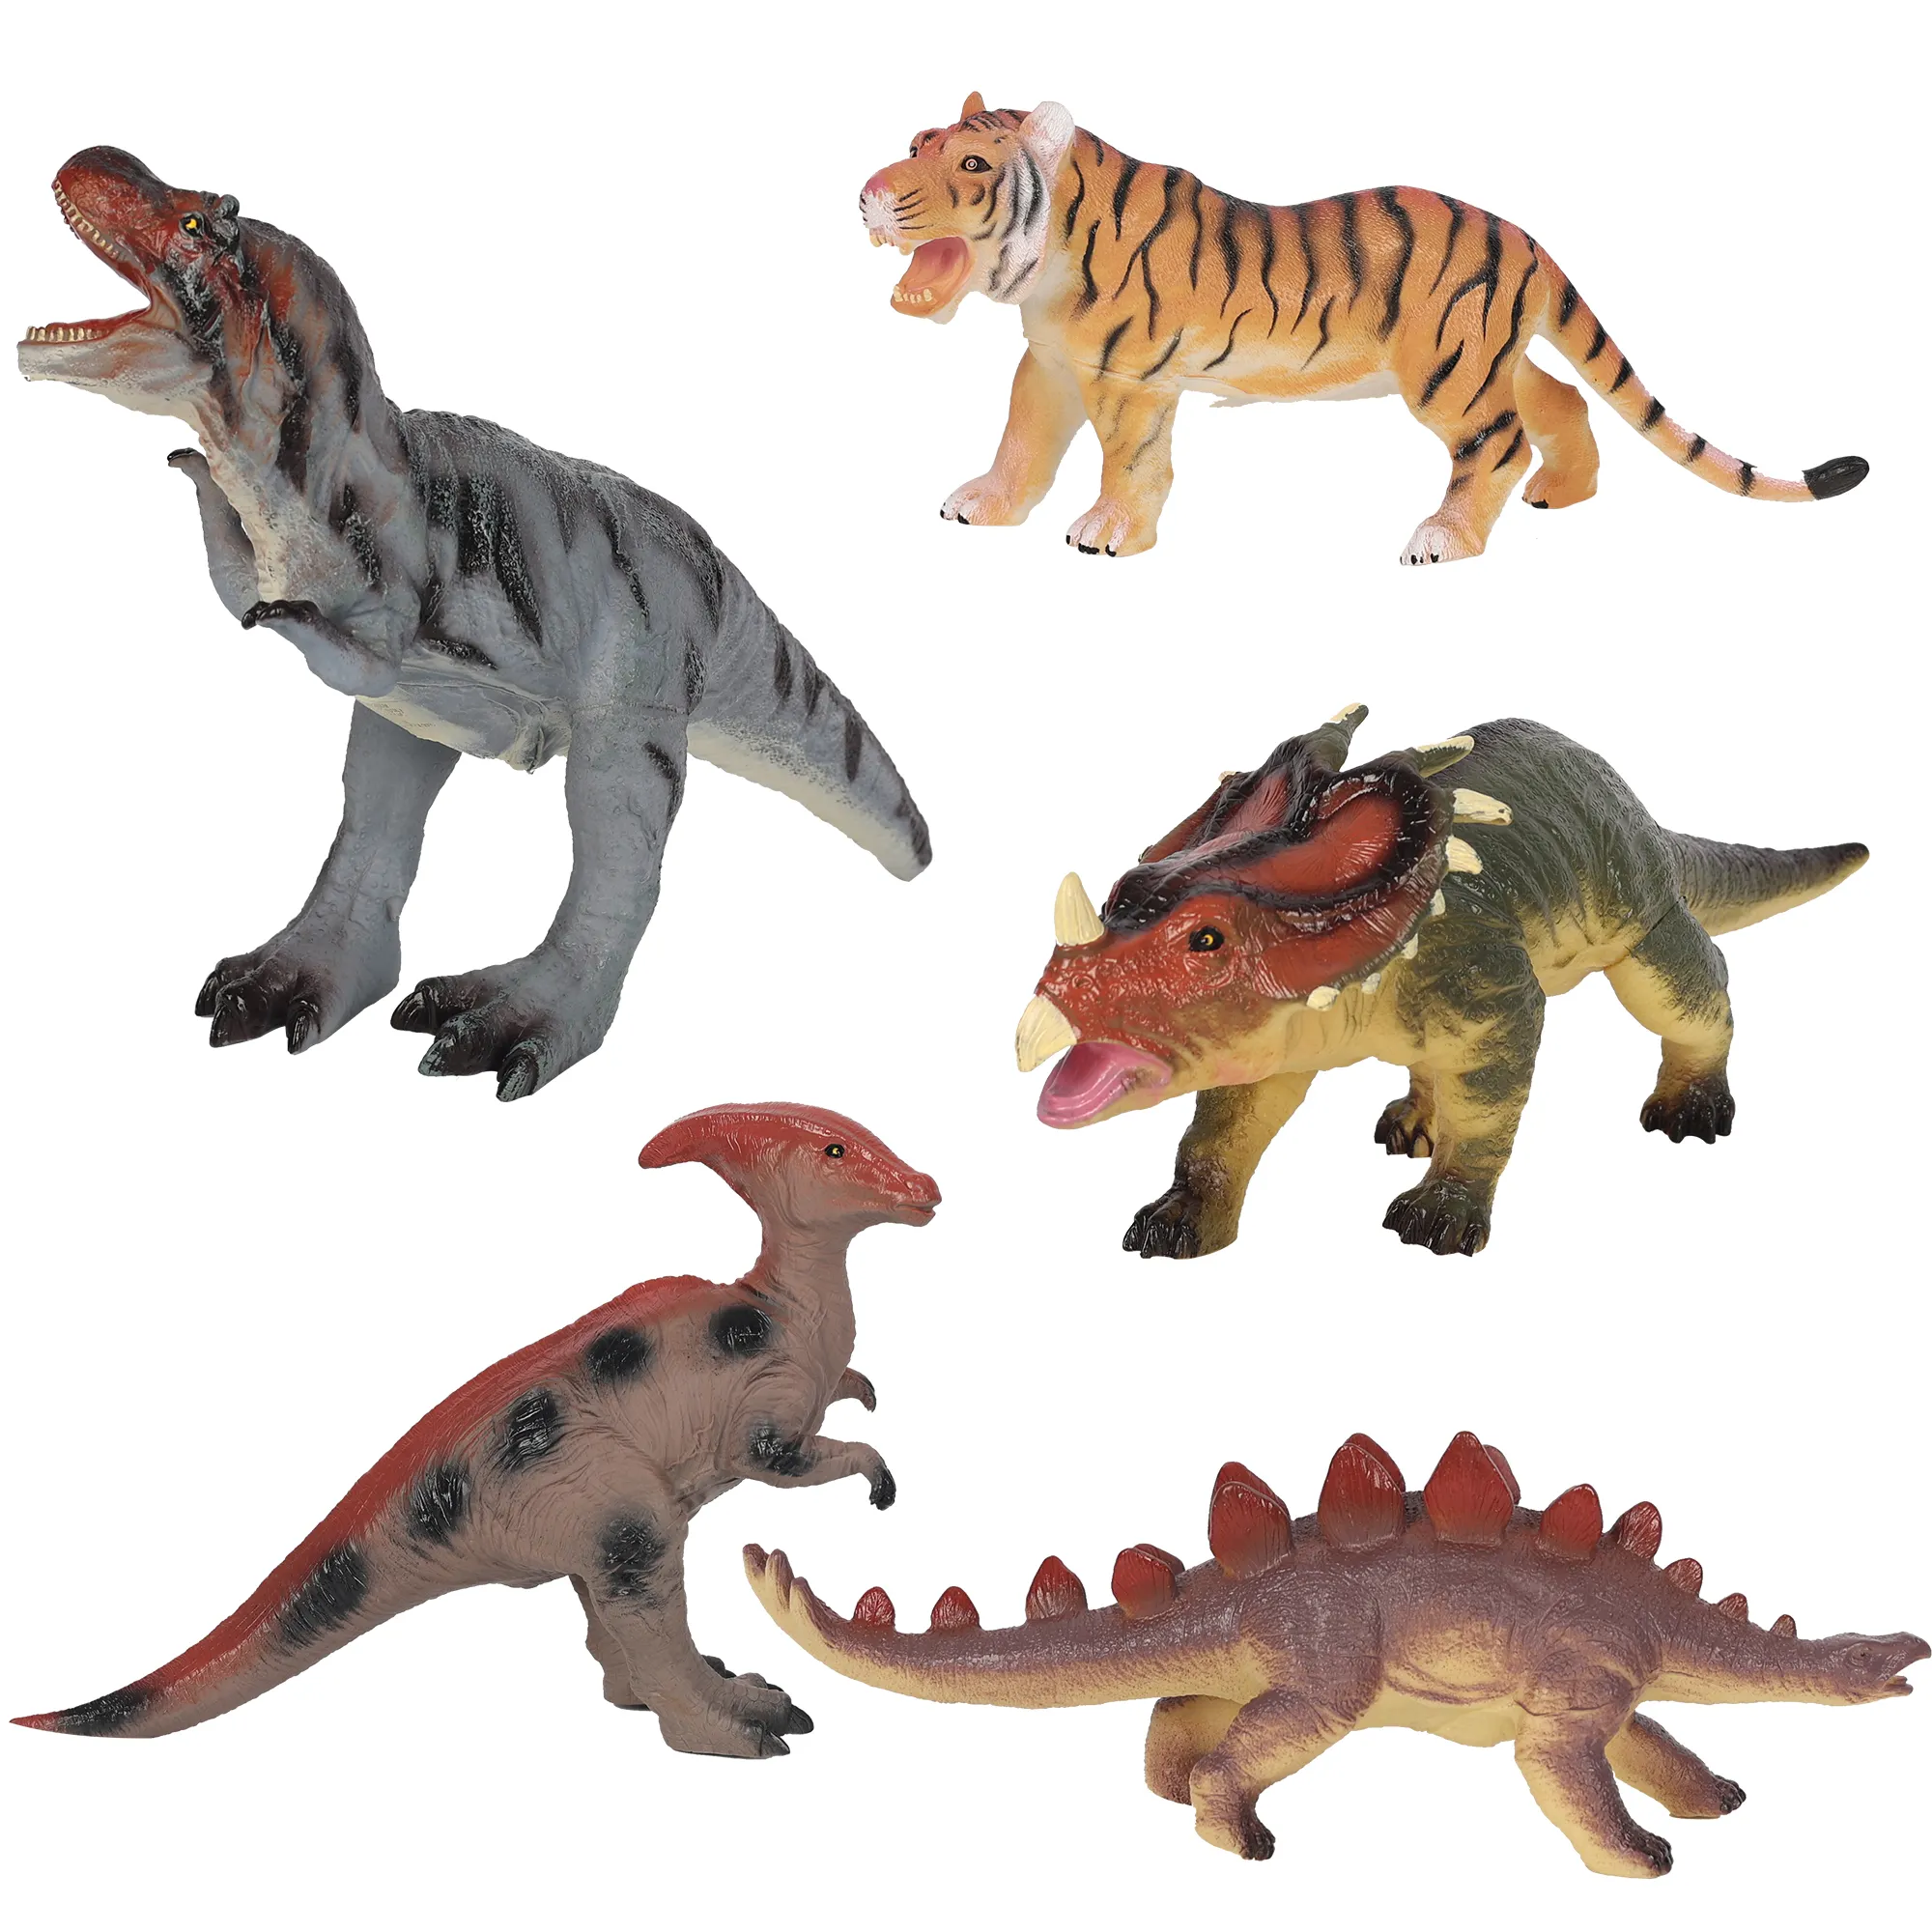 Jurassic Dinosaur Model Simulation Walking Tyrannosaurus Dino Toy Stuffed Soft Dinosaur Educational Toys For Children Kids